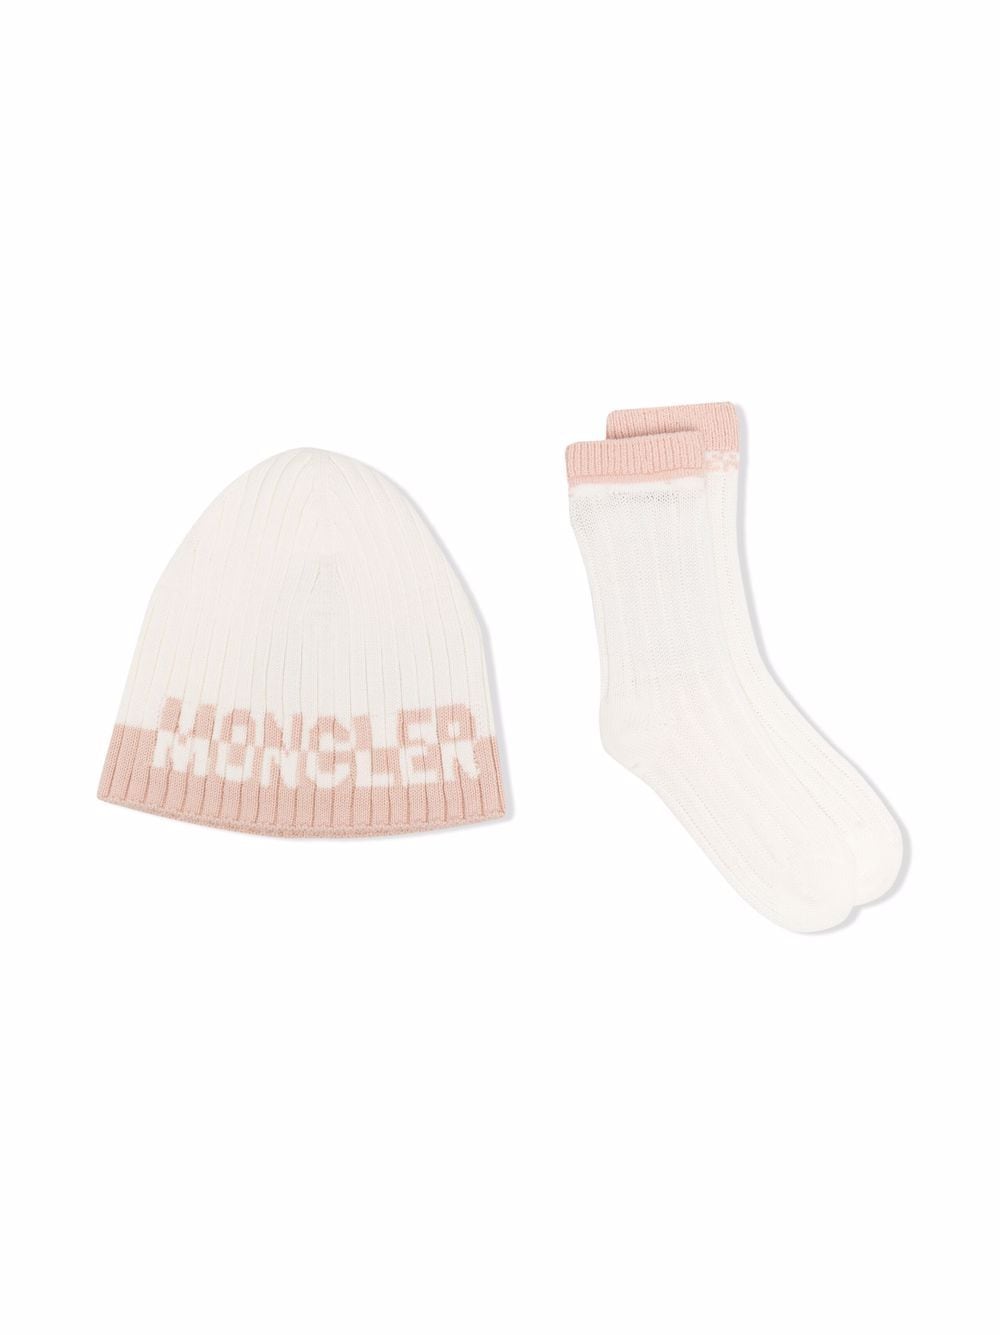 Moncler Enfant ribbed-knit two-piece set - White von Moncler Enfant